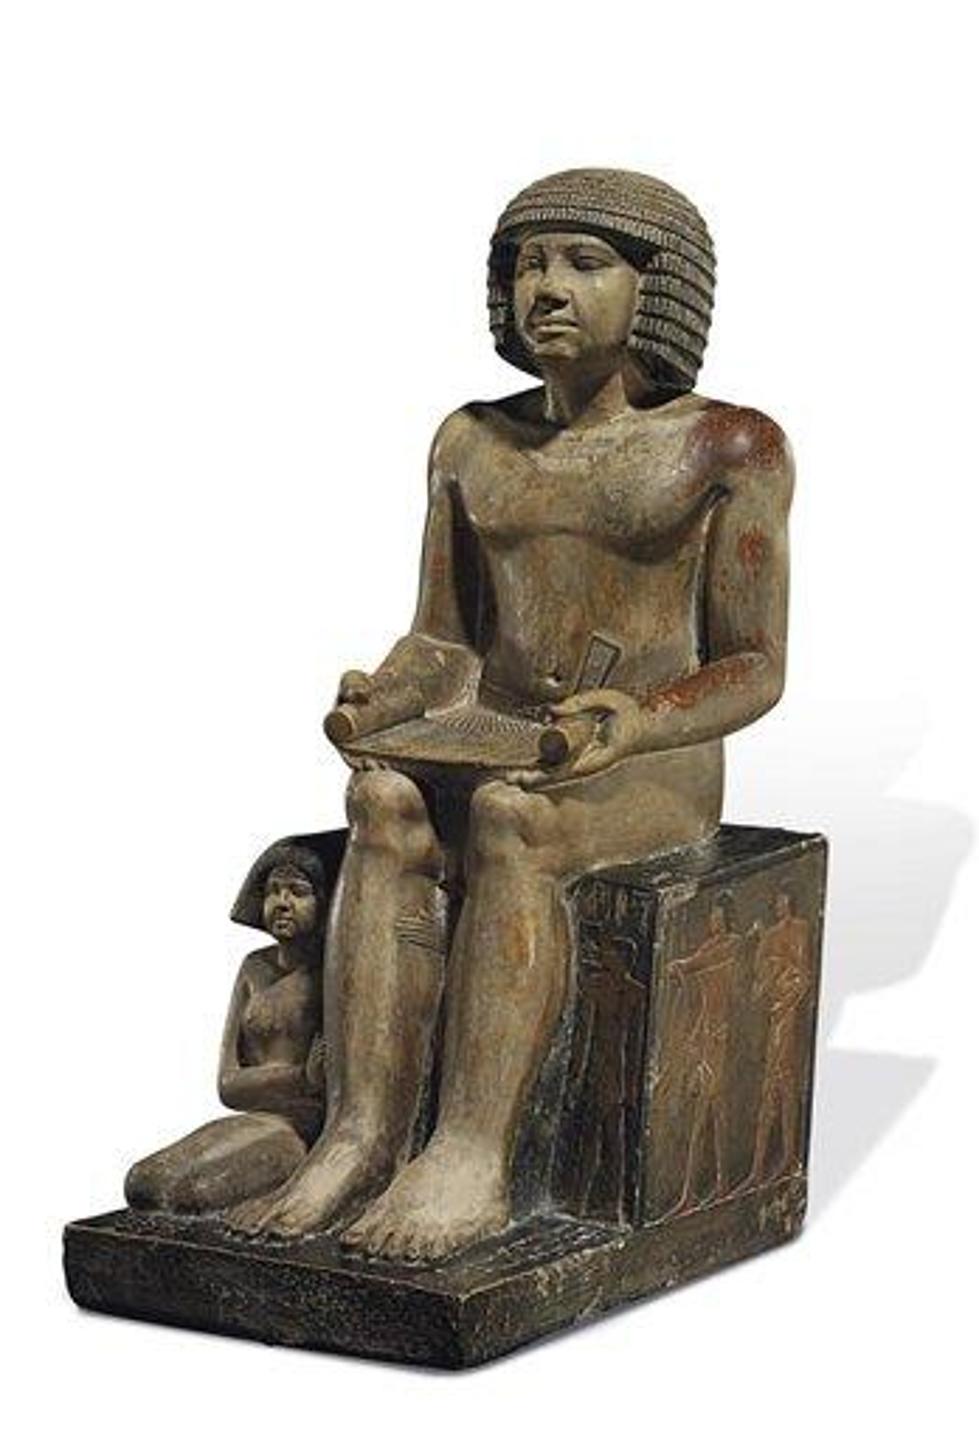 Egypt challenges sale of valuable ancient statue